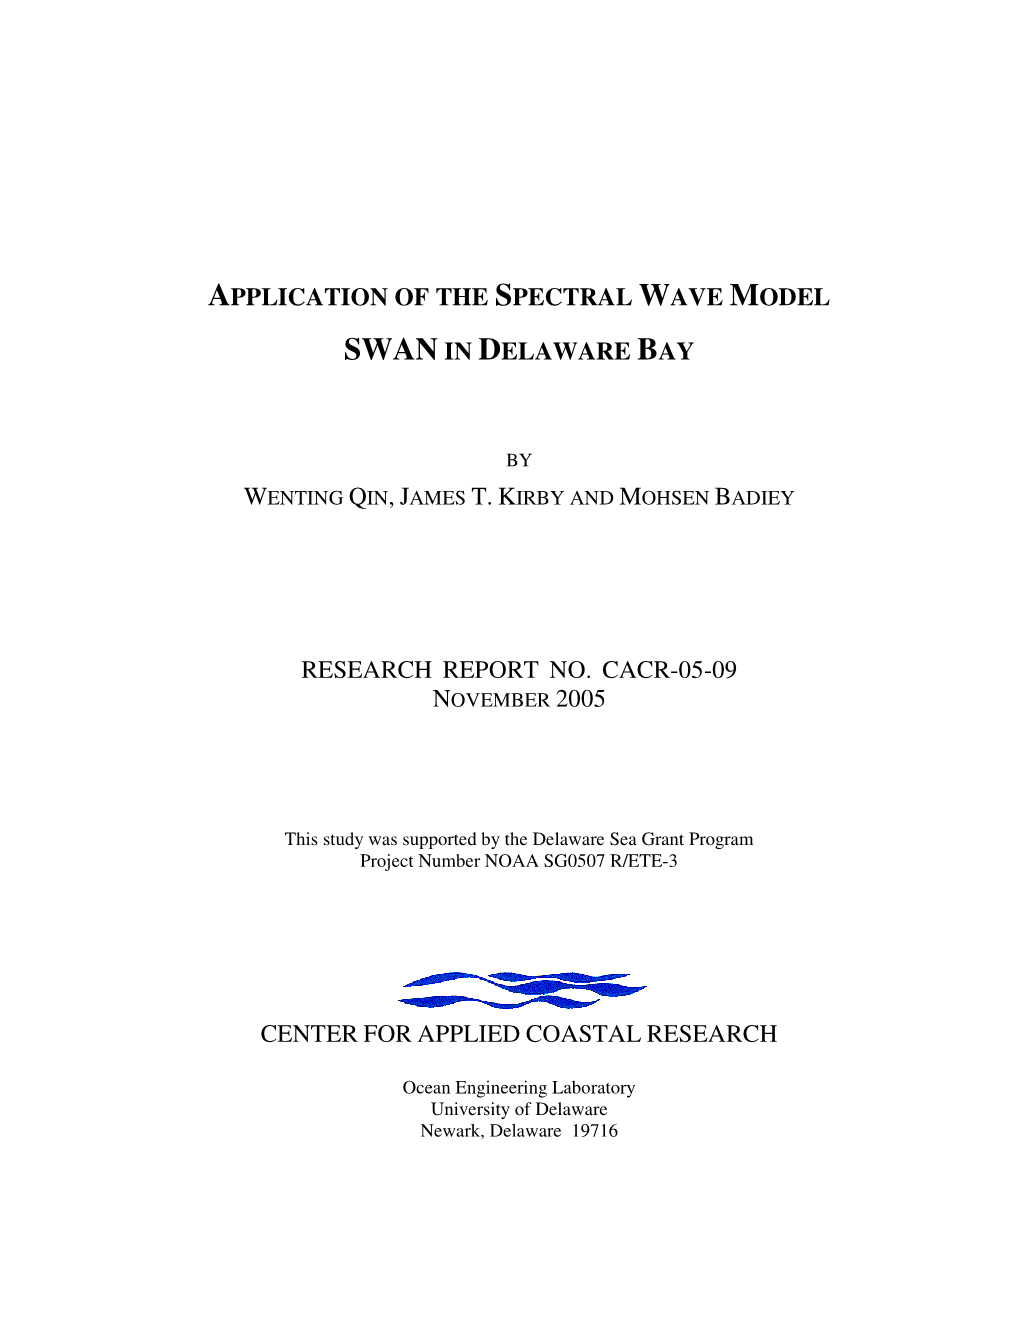 Application of the Spectral Wave Model Swan in Delaware